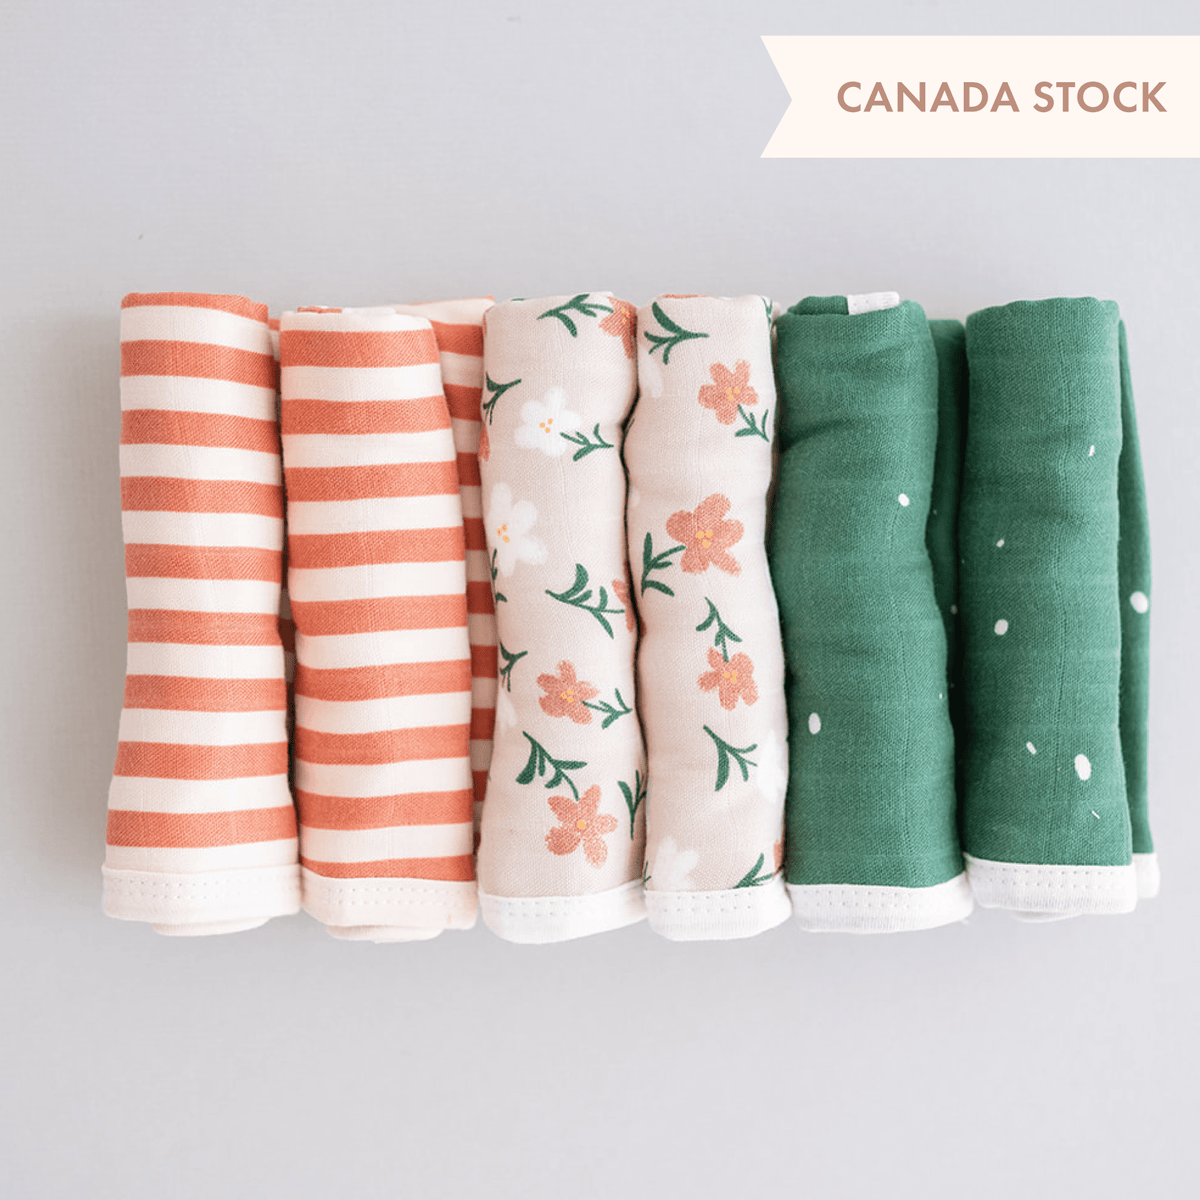 Muslin Washcloths Starry/Floral/Stripes - Canada Stock